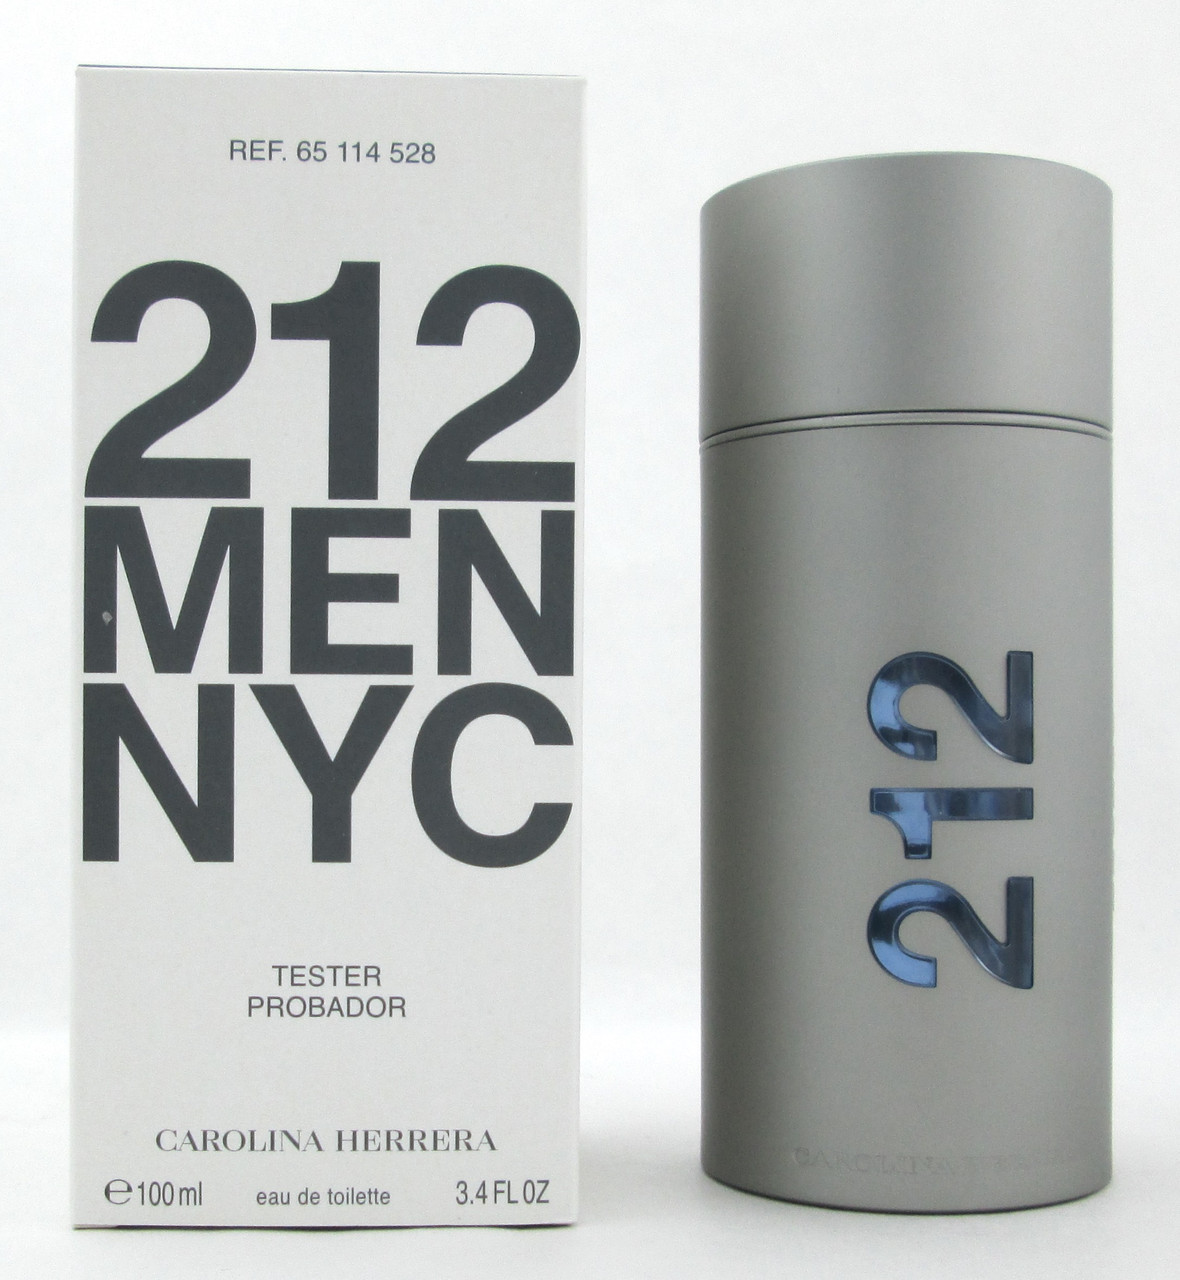 212 MEN NYC by Carolina Herrera 3.4 oz./ 100 ml. Eau de Toilette Spray. New  Tester 